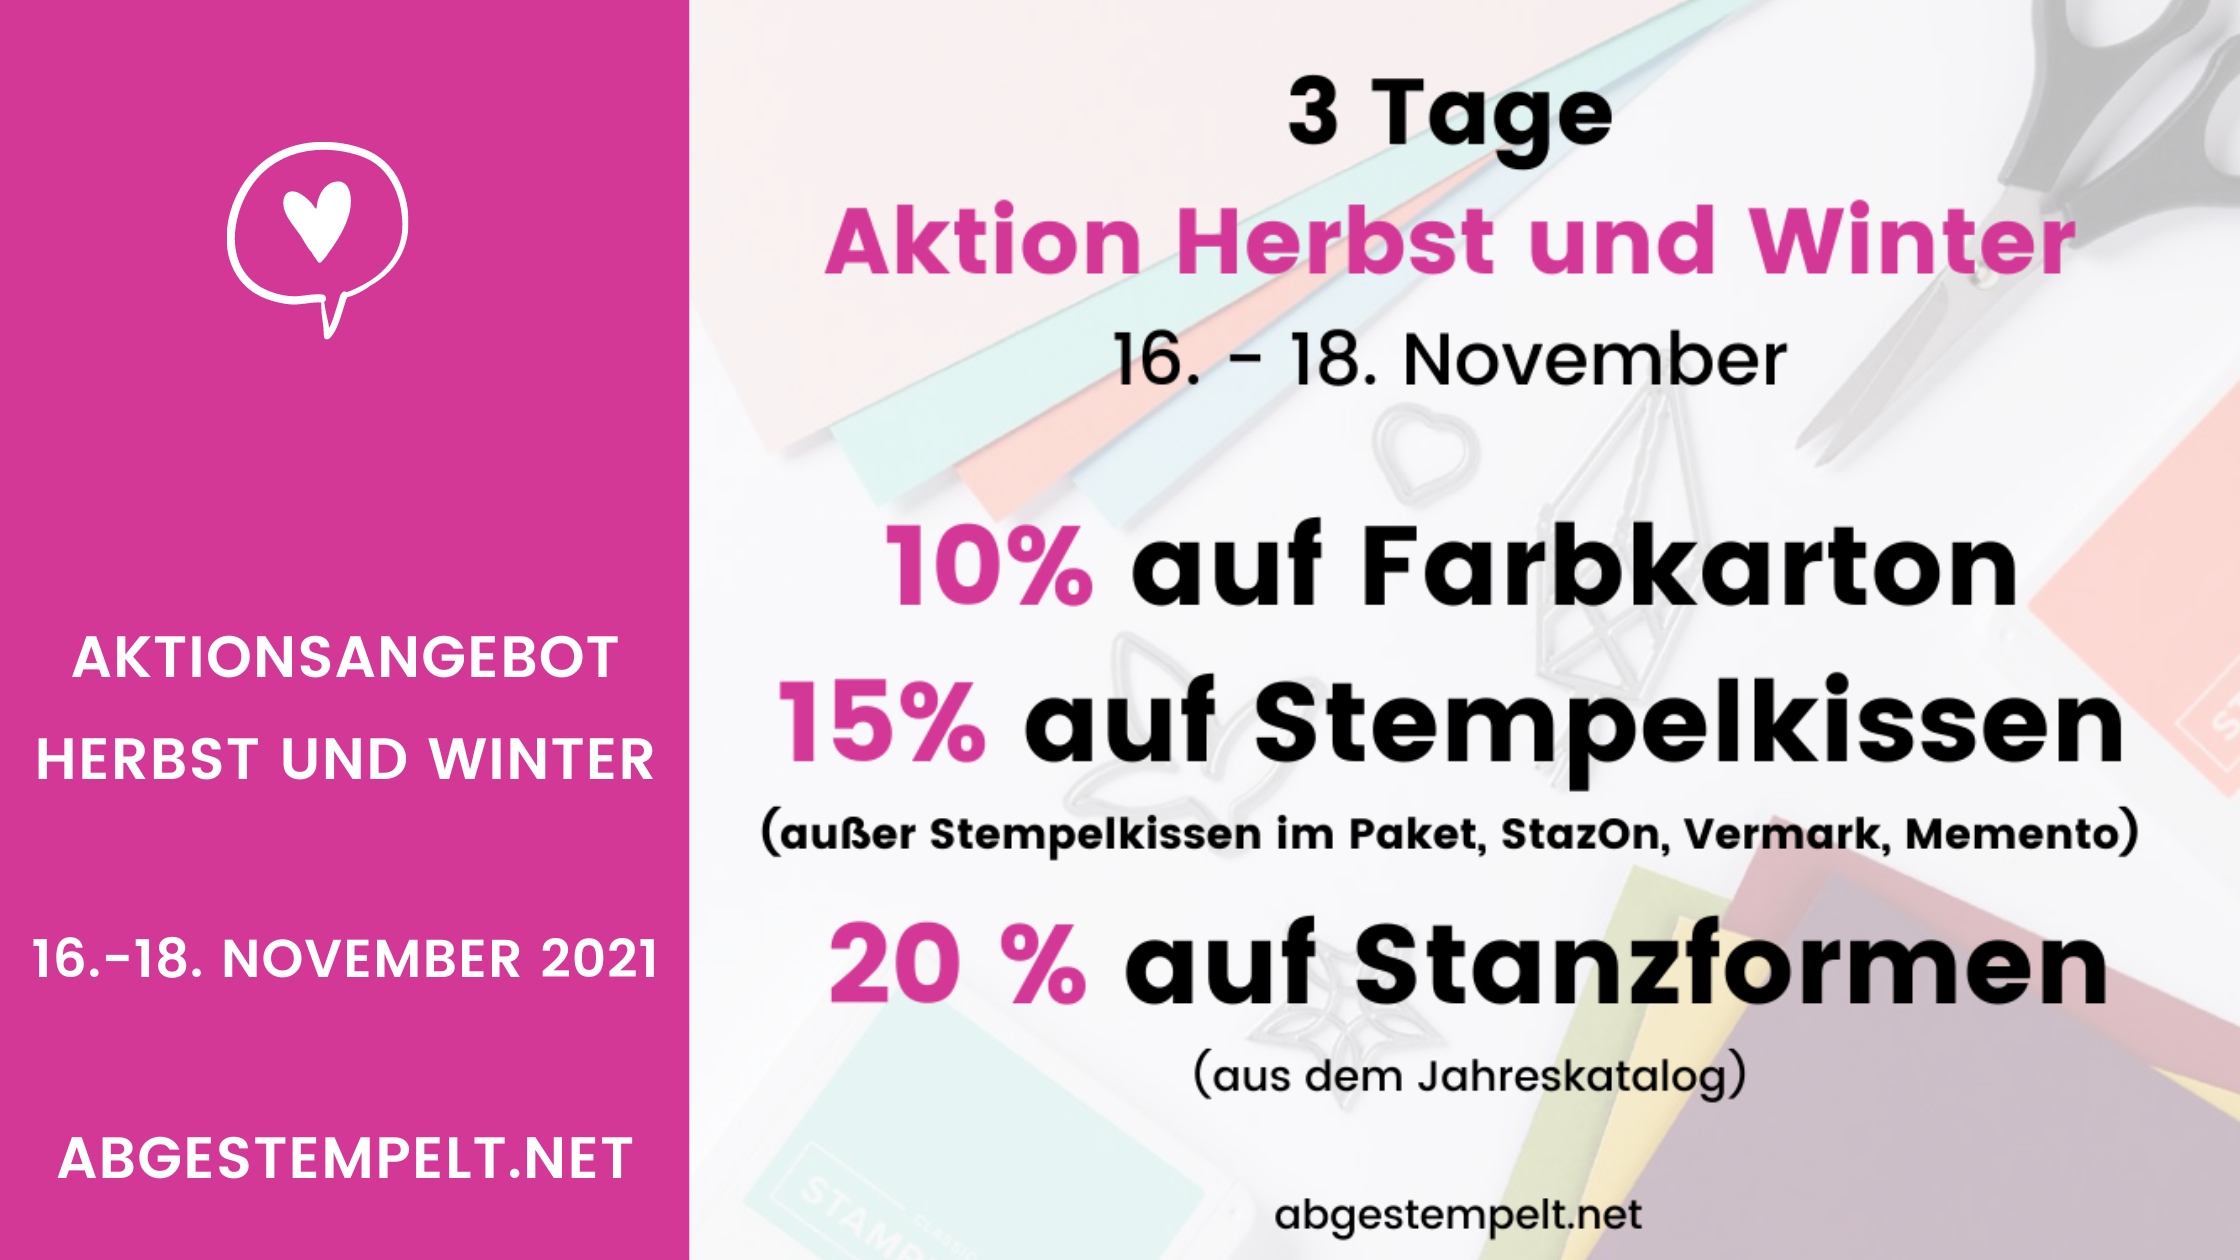 Blog stampin up Aktion Herbst und Winter 16. 18. November 2021 abgestempelt